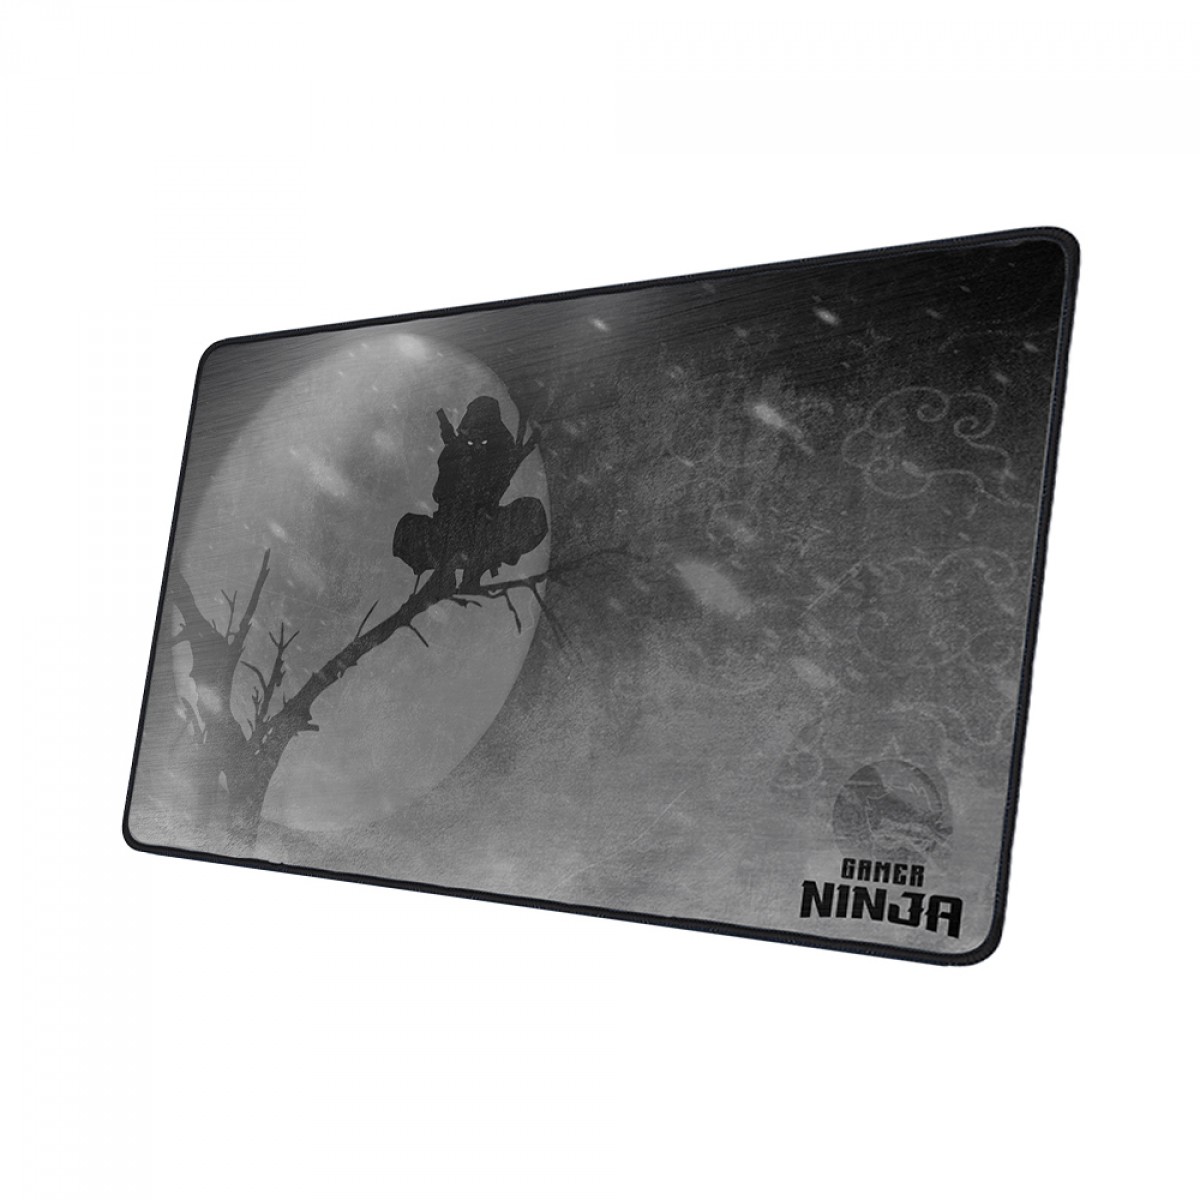 Mousepad Gamer Ninja, Control, Médio 400x300mm, Black, MPGN-BLACK-M